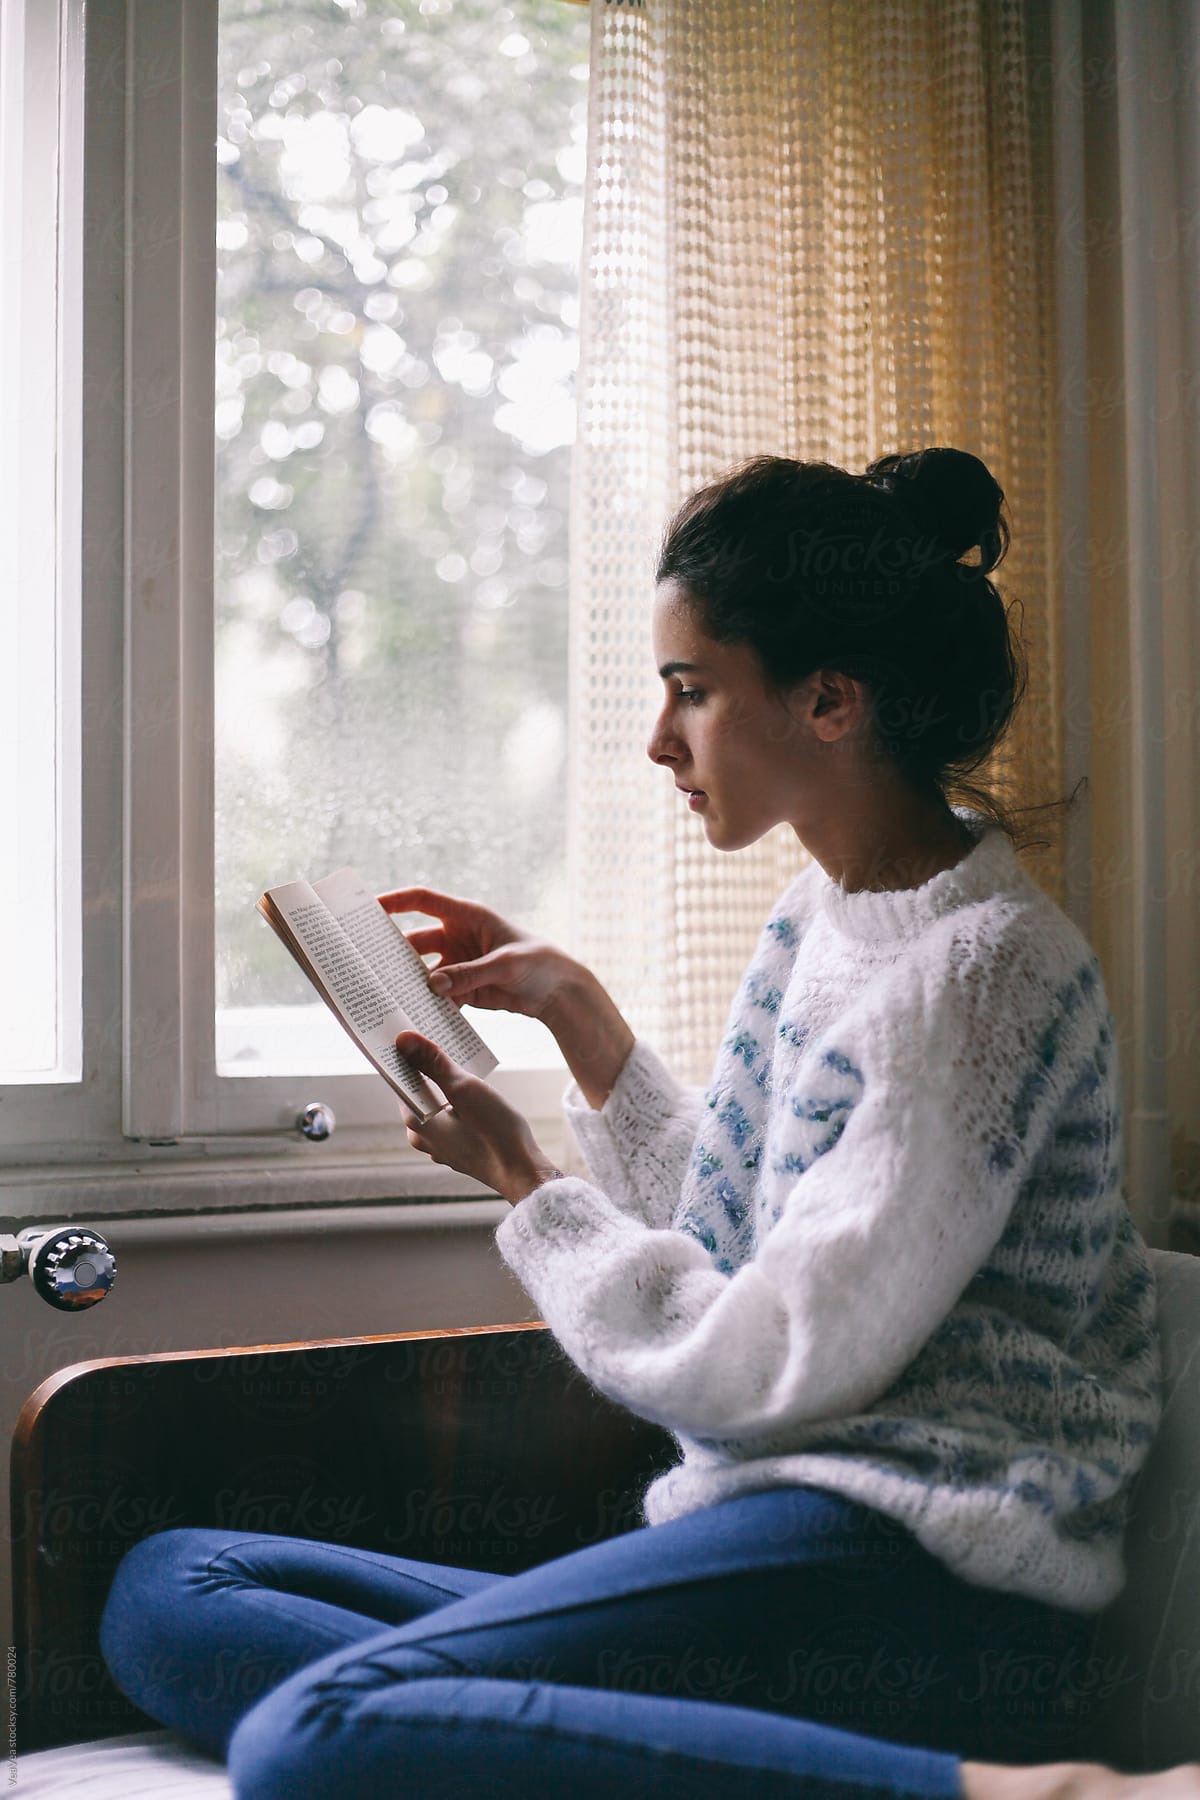 Beautiful Woman Reading A Book In Her Room Near The Window by Stocksy  Contributor Marija Mandic - Stocksy